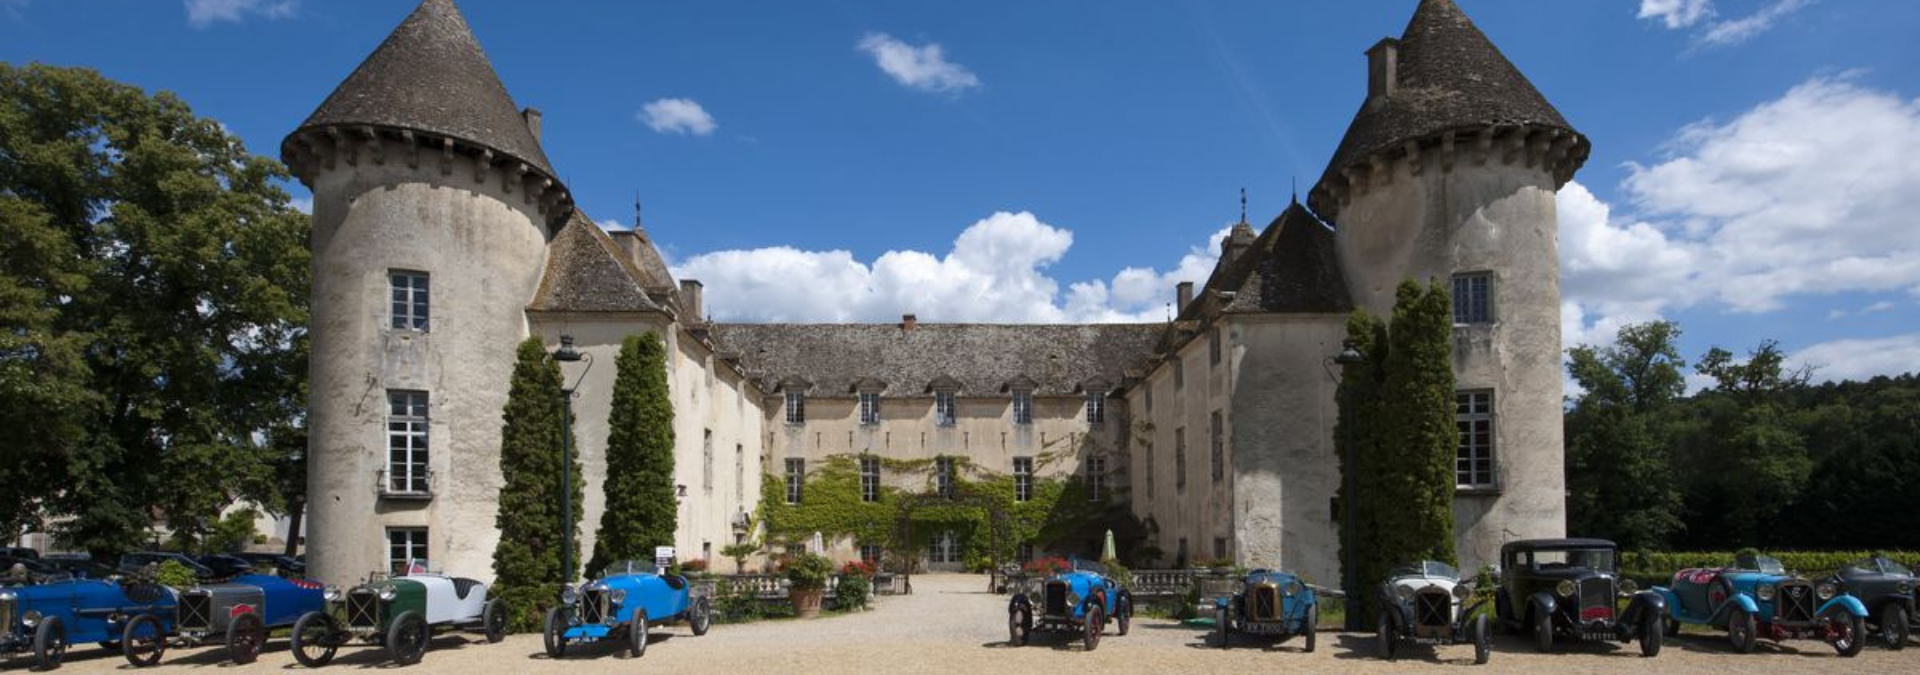 Château de Savigny-lès-Beaune